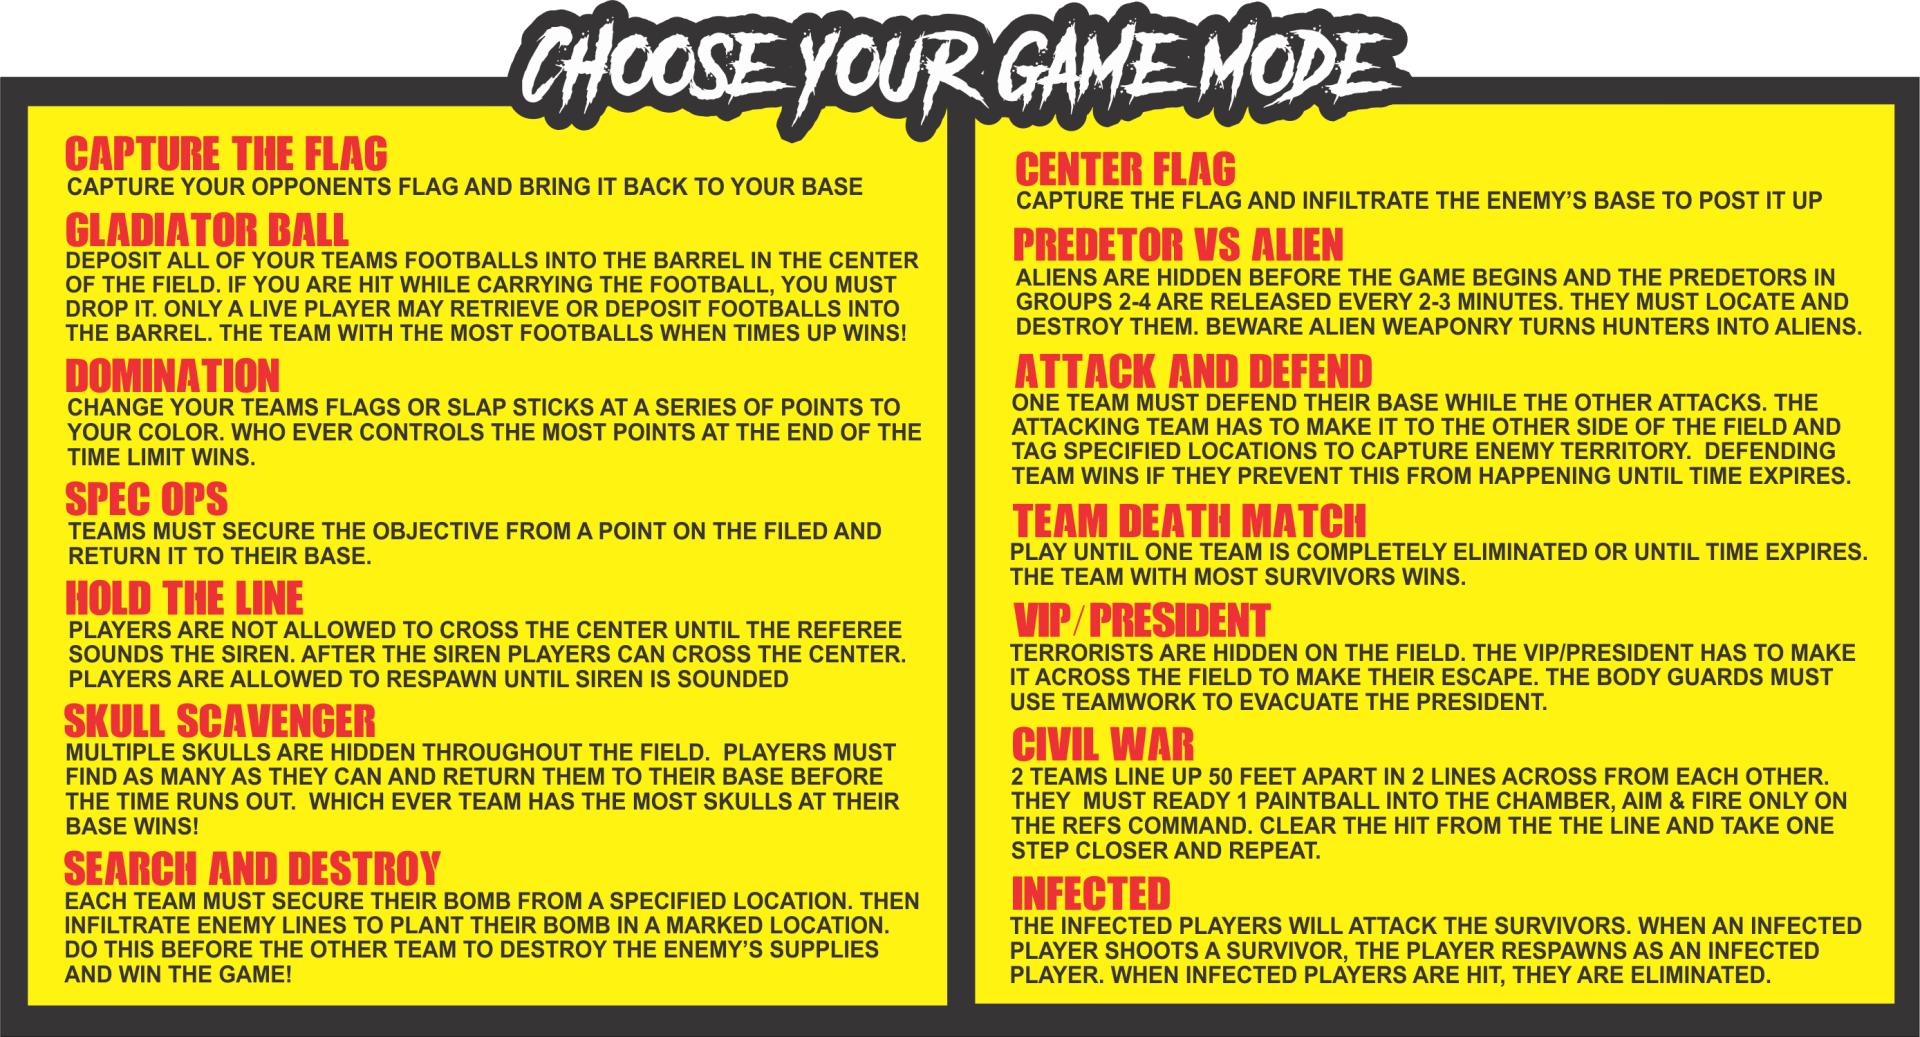 Choose your game mode menu